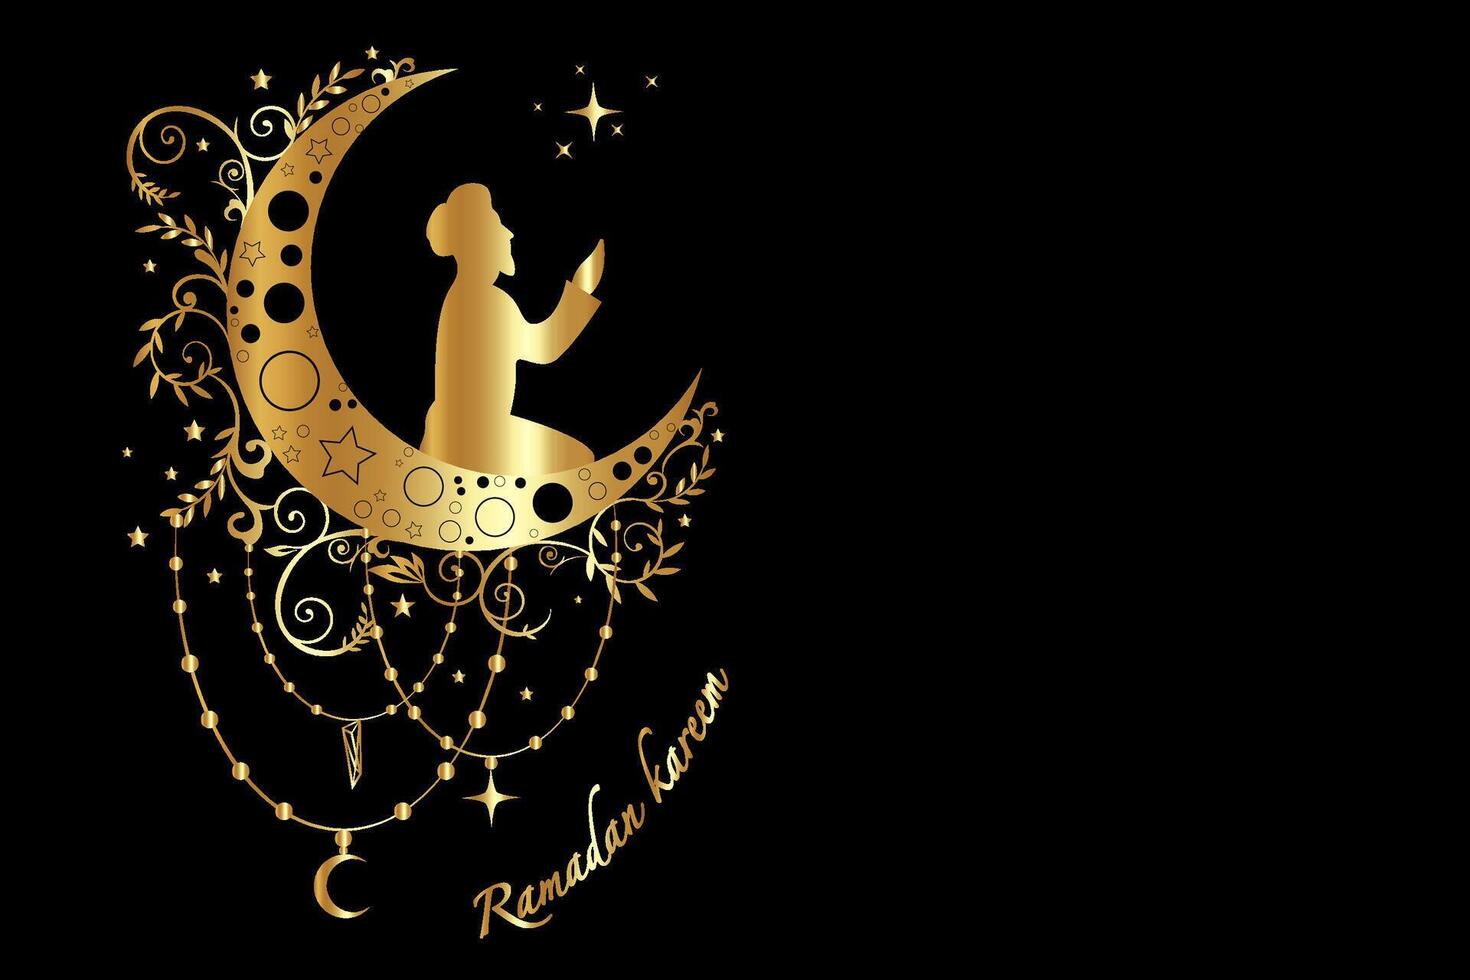 oro silueta de un musulmán Orando en ascendente luna, Ramadán concepto en boho estilo. lujo islámico símbolo lata ser usado para el mes de Ramadán para logo, sitio web y póster diseños vector